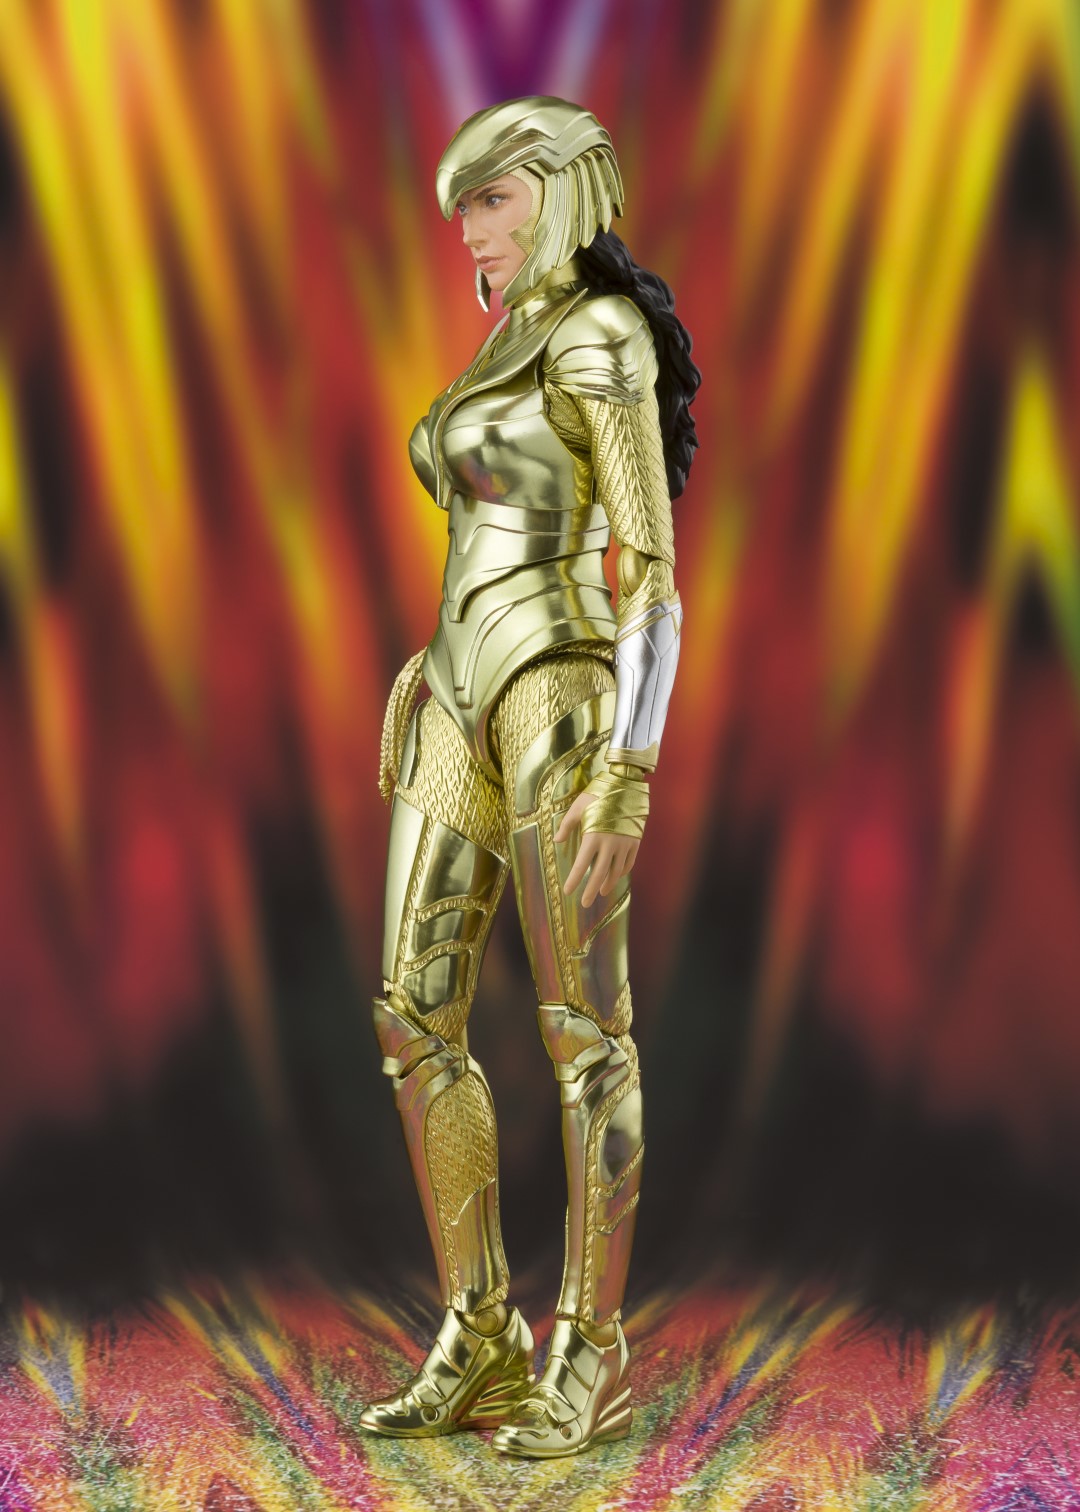 SH Figuarts Wonder Woman 1984 Golden Armor